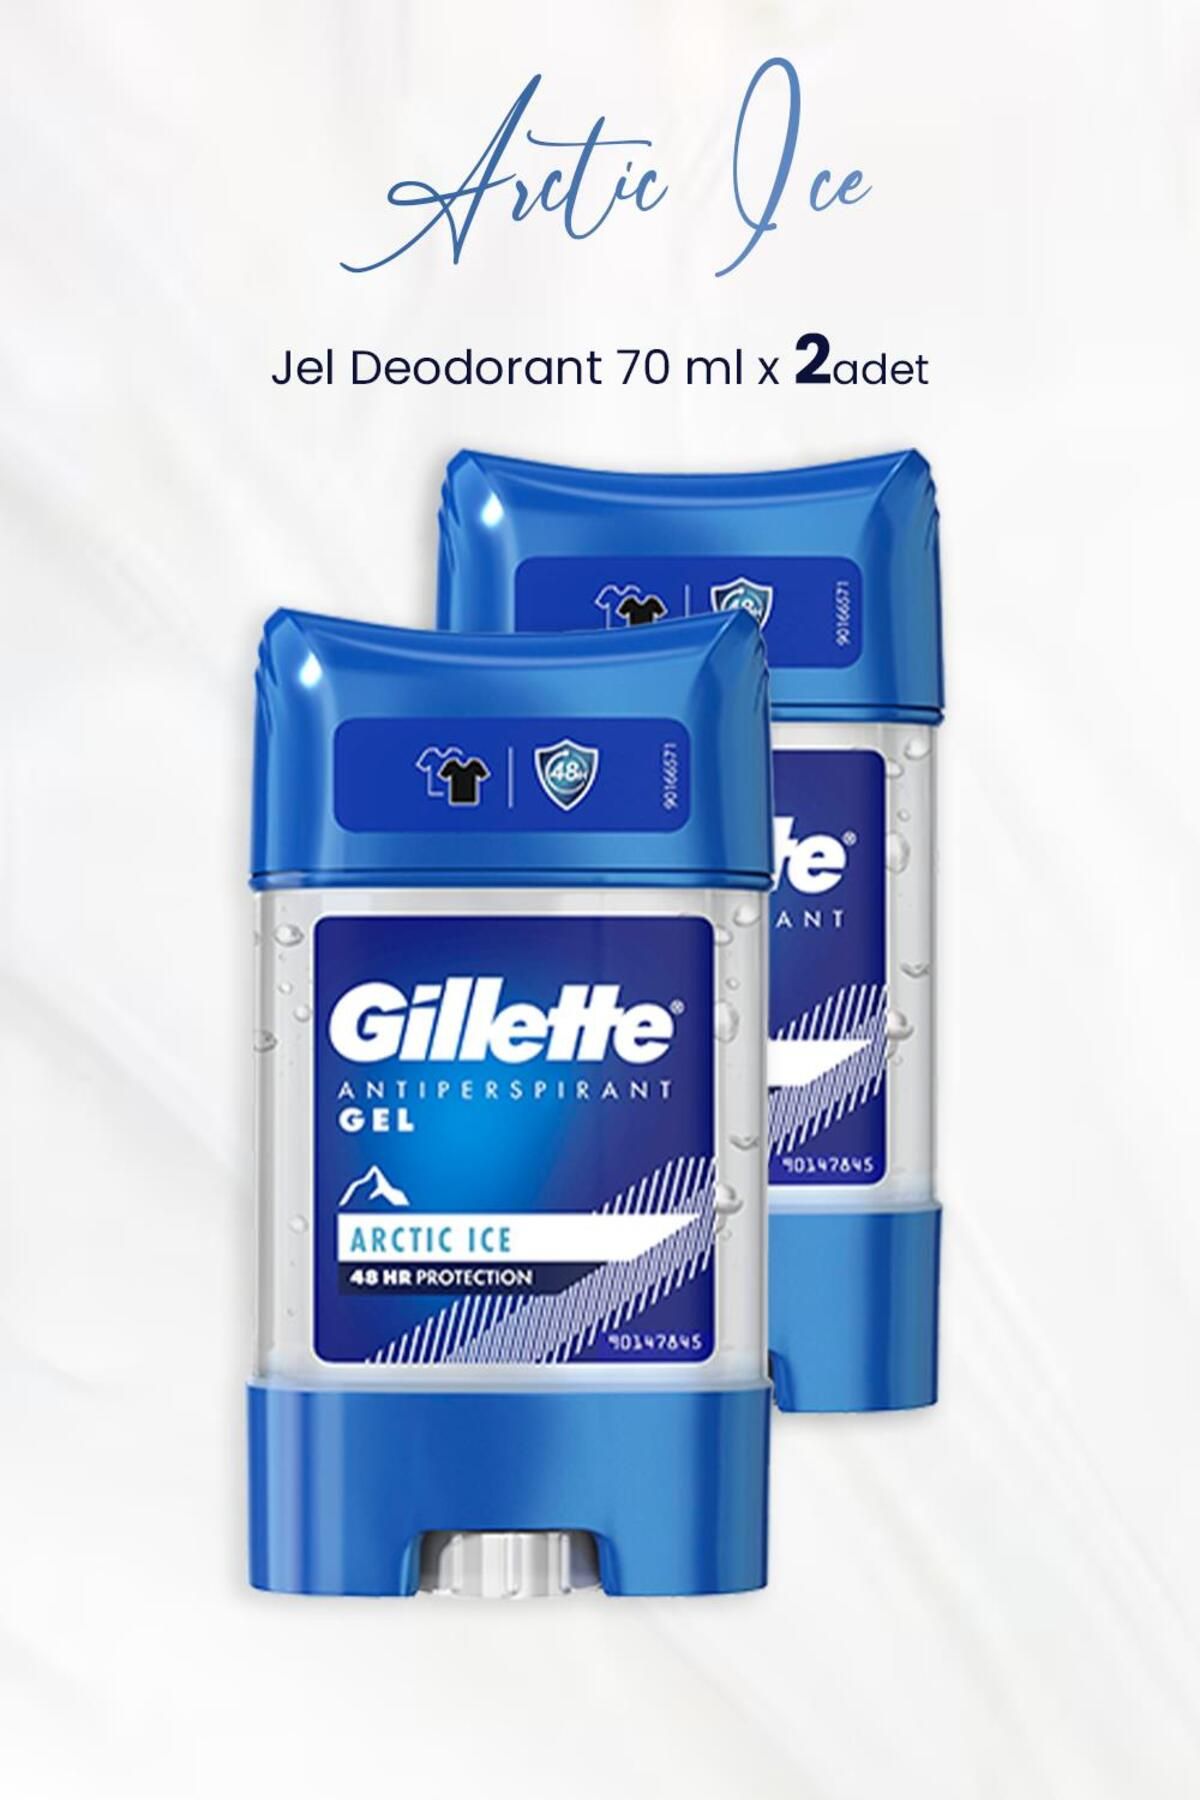 Gillette Antiperspirant Gel Arctic Ice 70 ml X 2 Adet